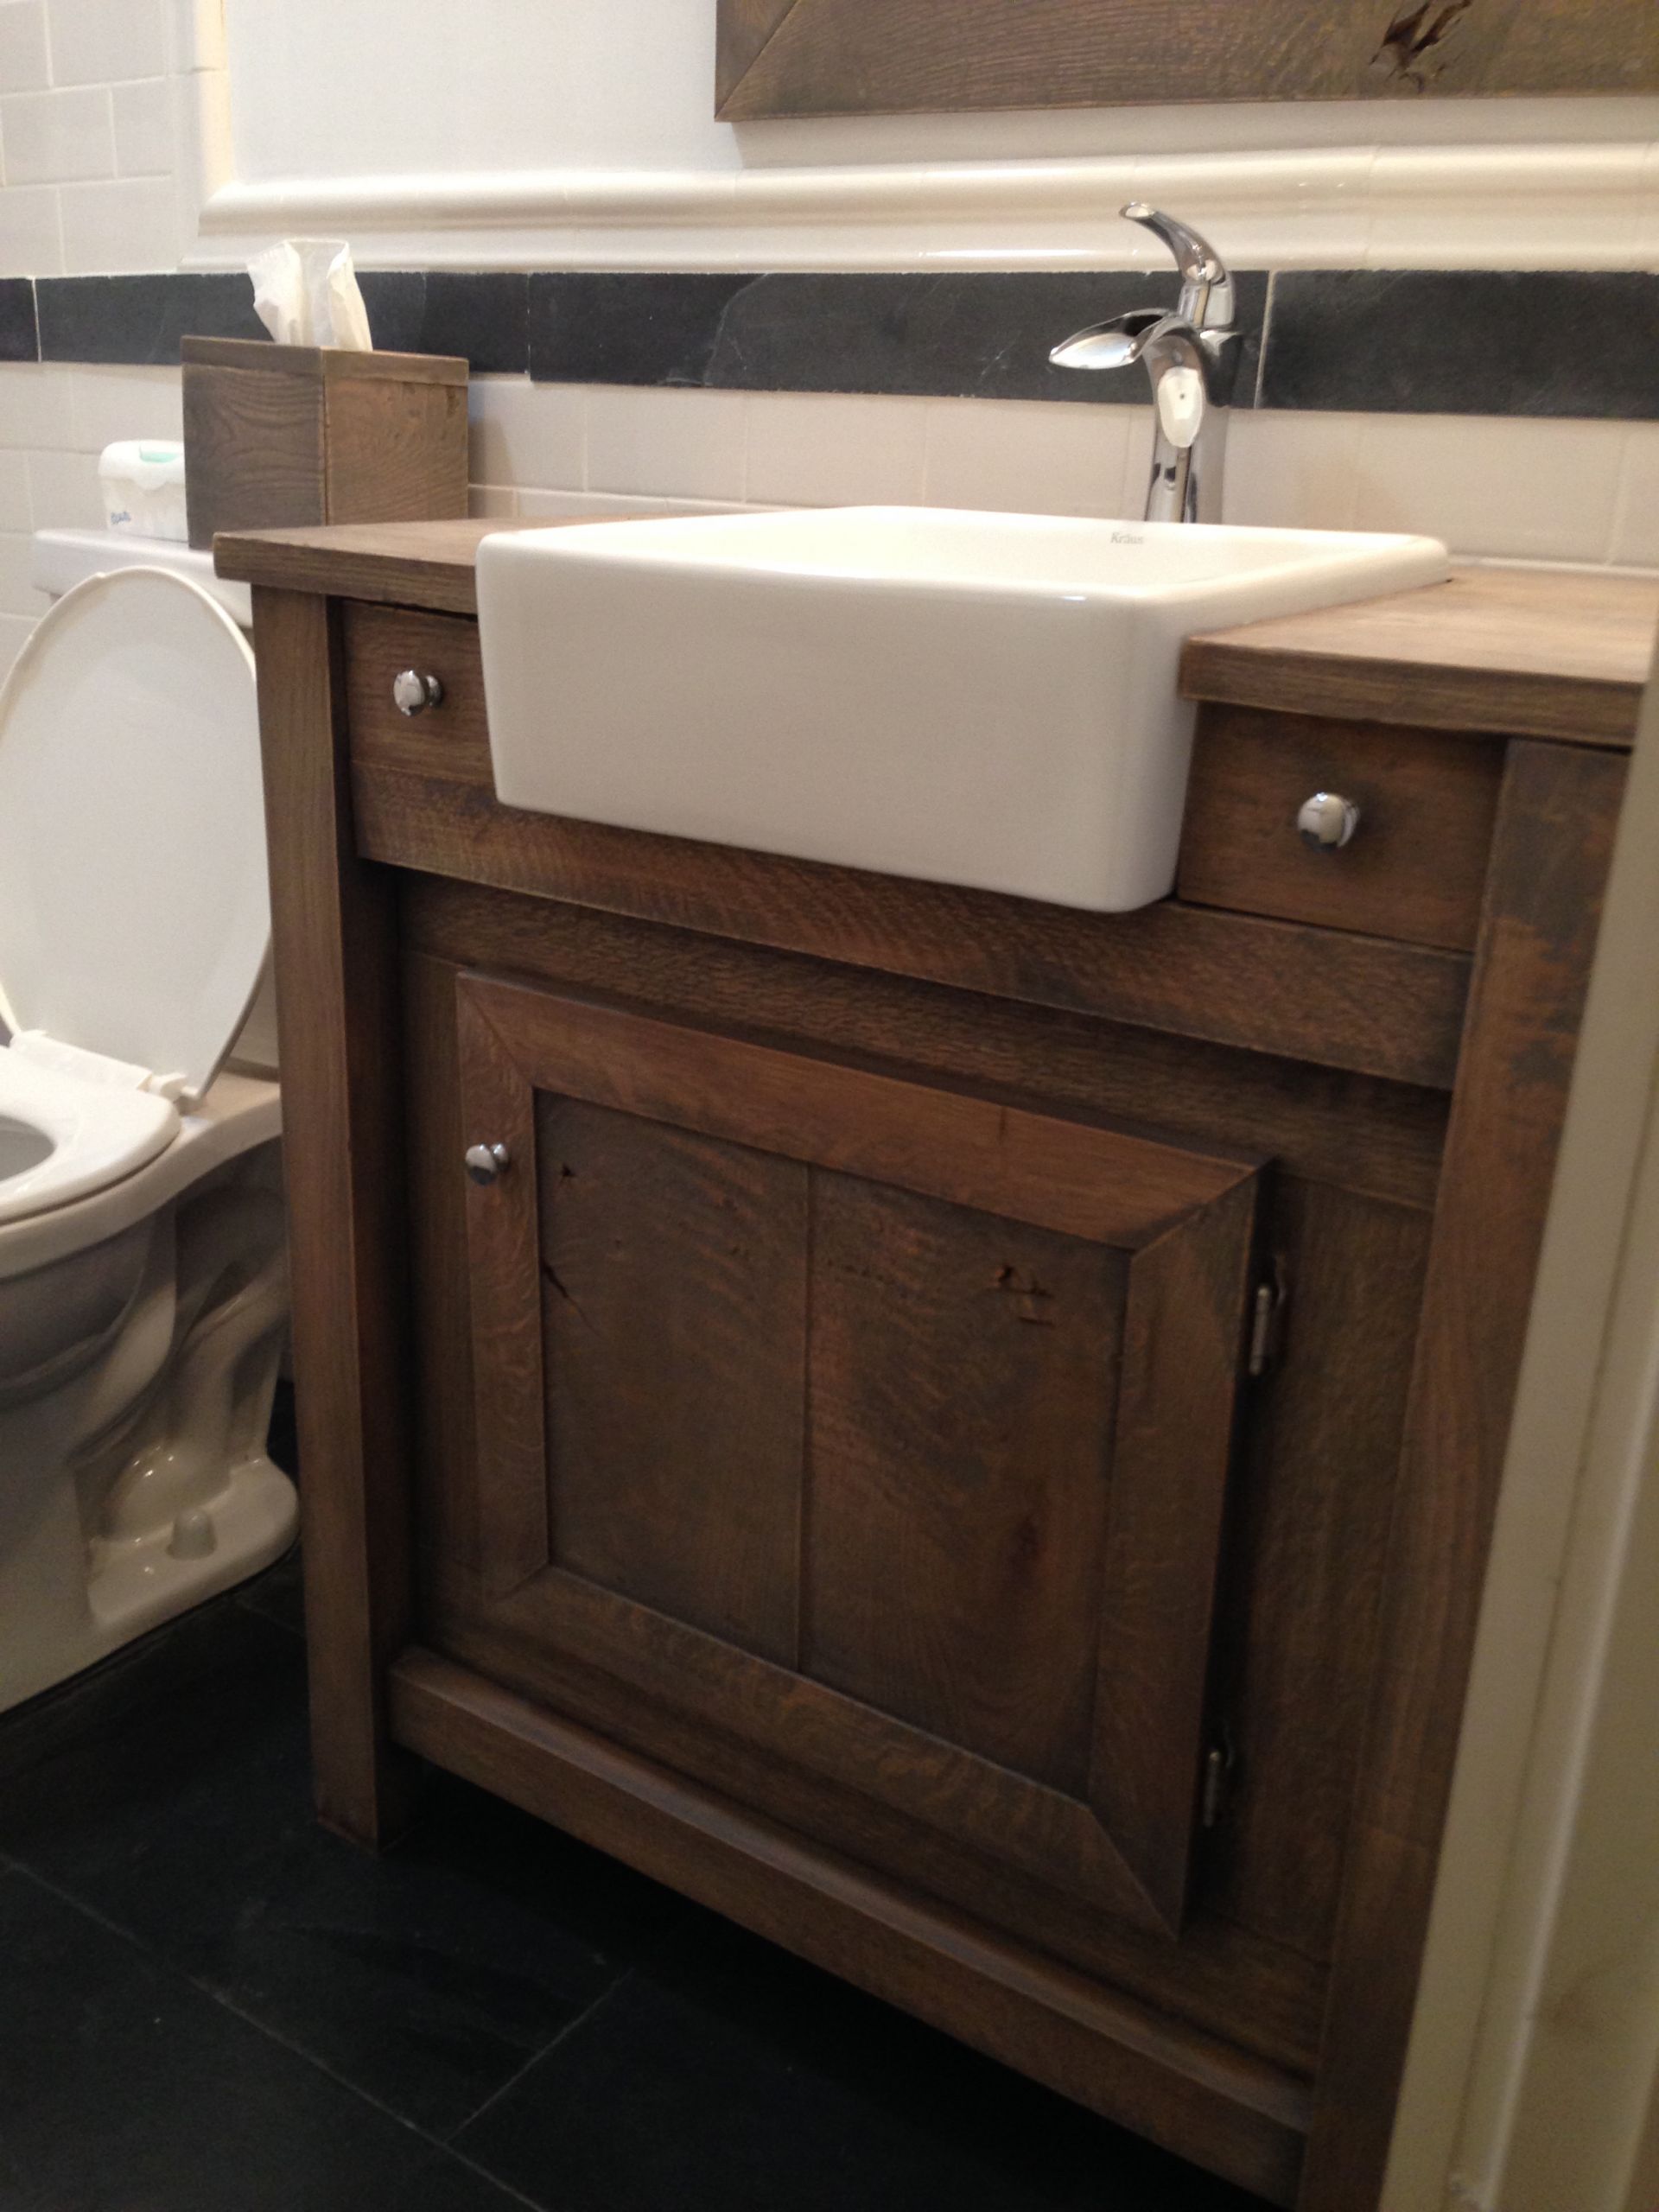 Farmhouse Bathroom Sink
 Bathroom Farm Sink Product Options – HomesFeed